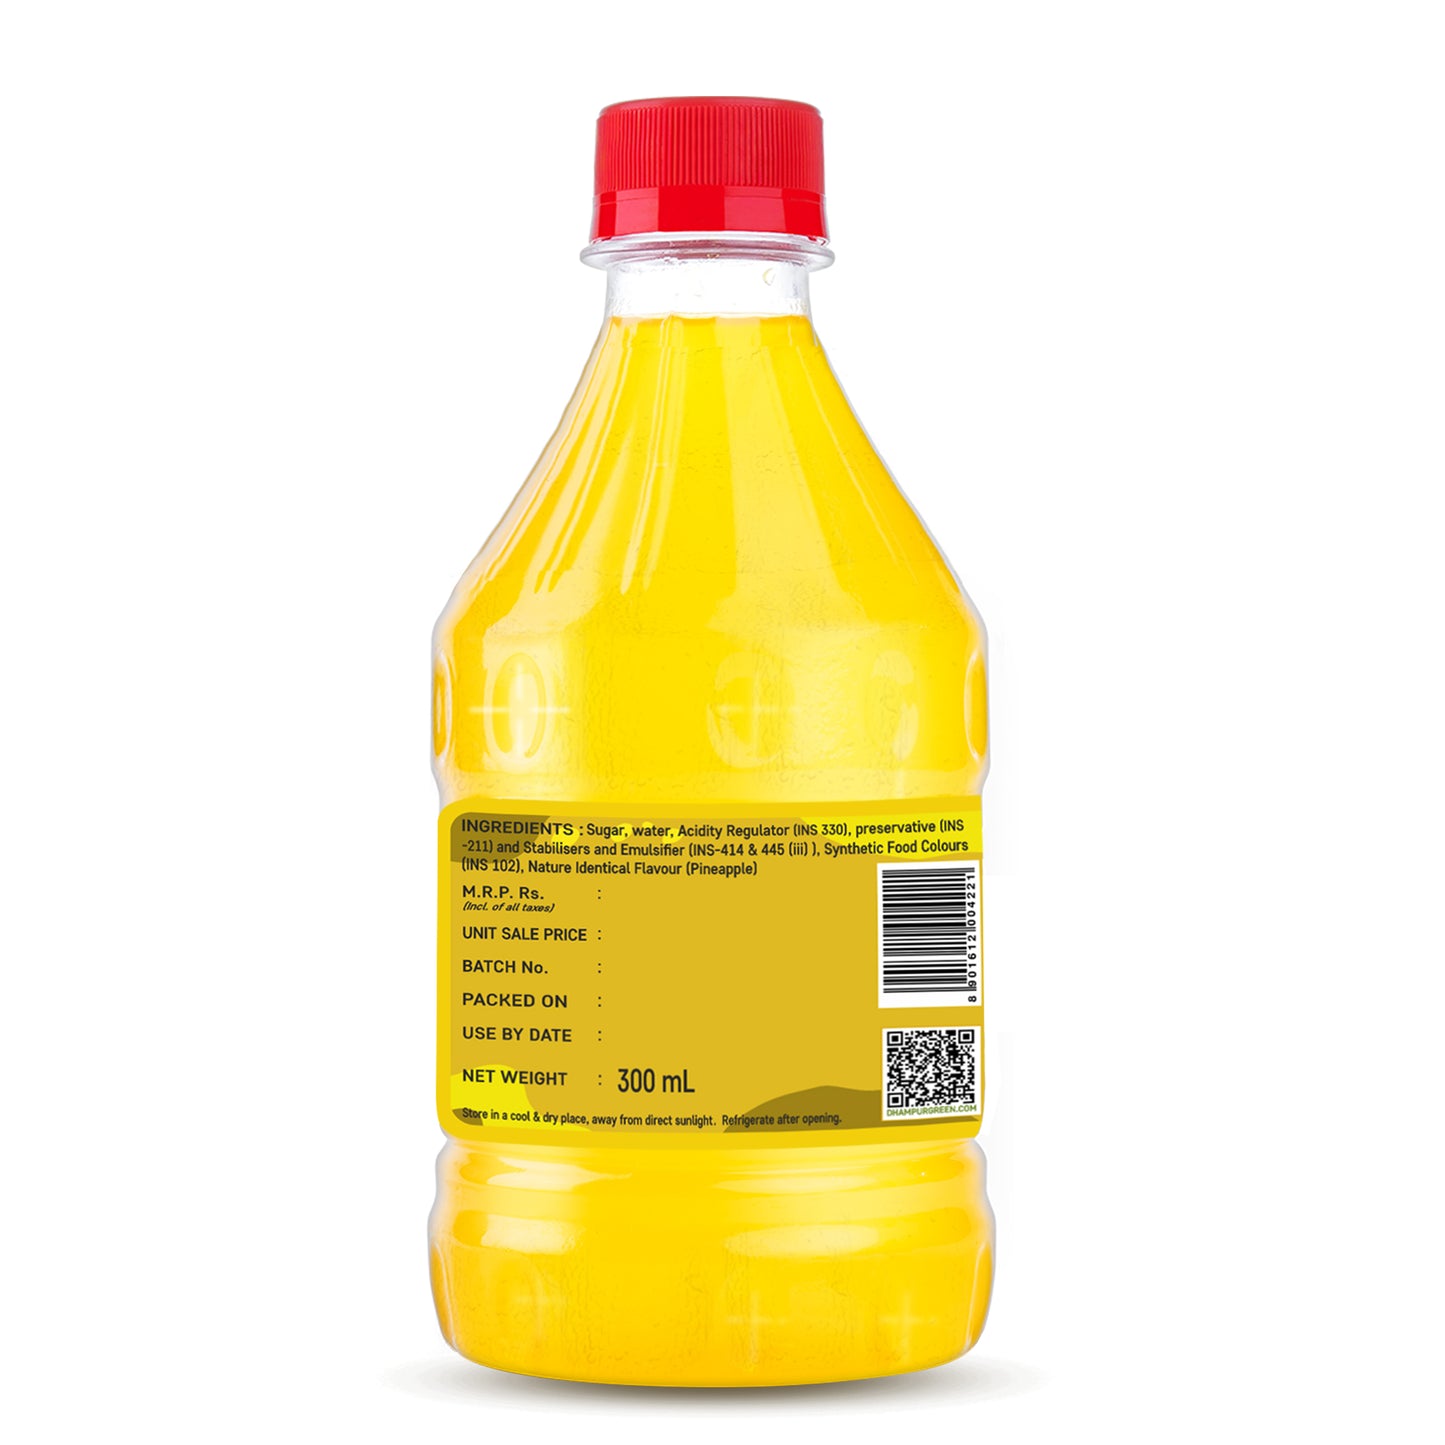 
                  
                    Kerala Pineapple Syrup 300ml
                  
                